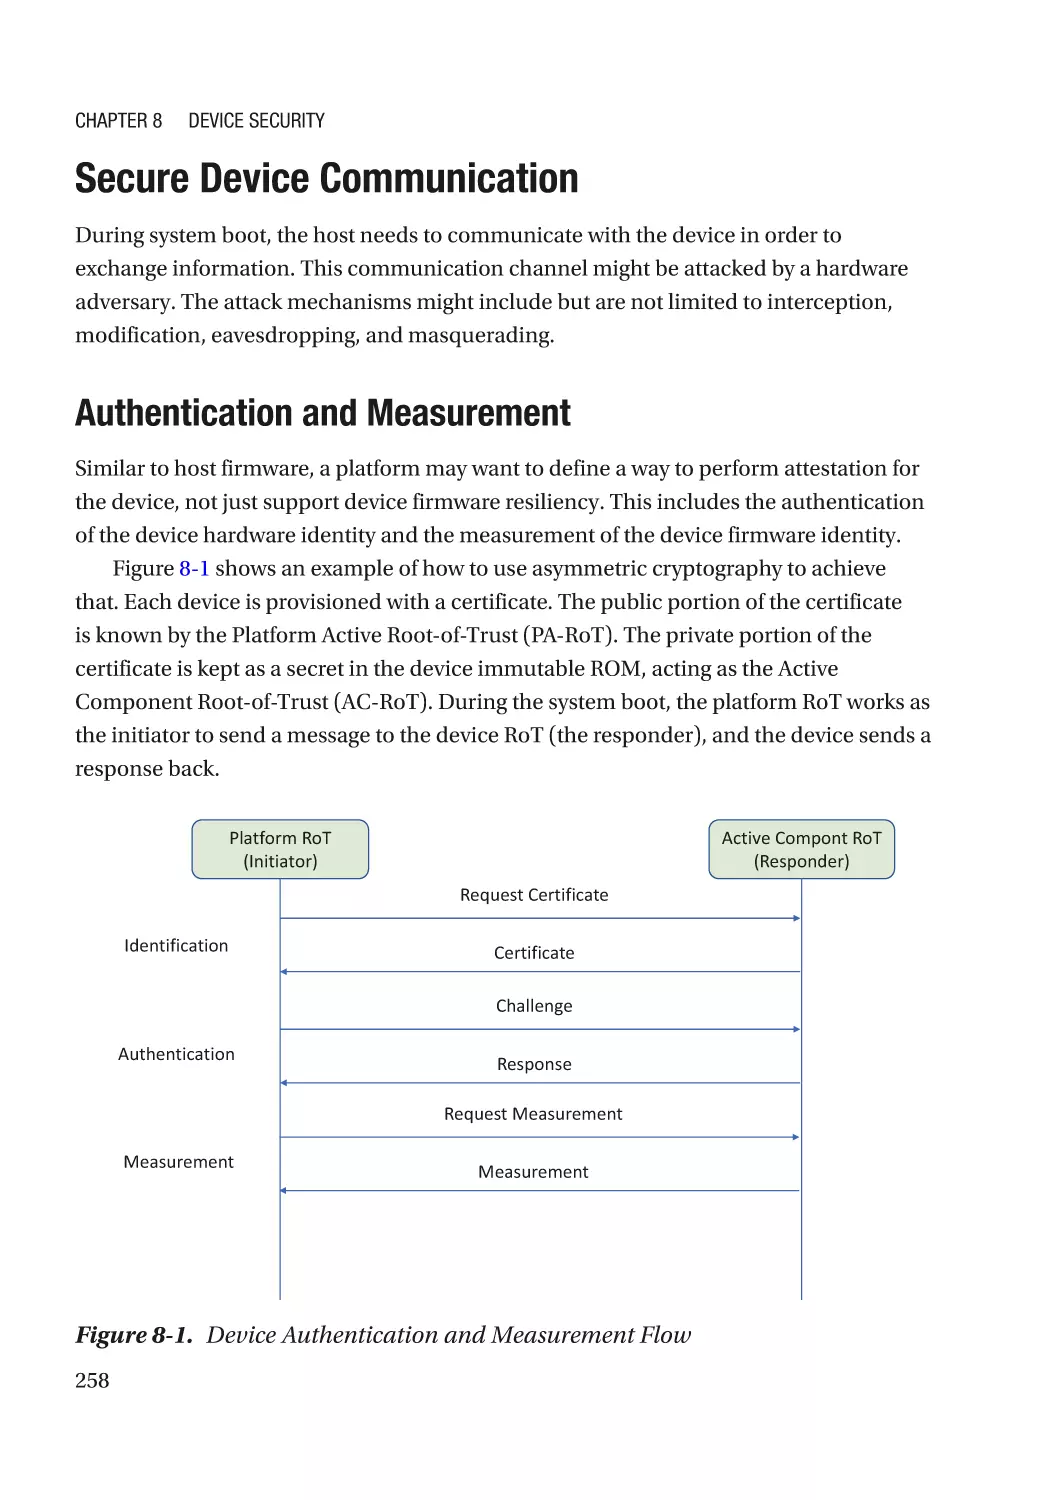 Secure Device Communication
Authentication and Measurement